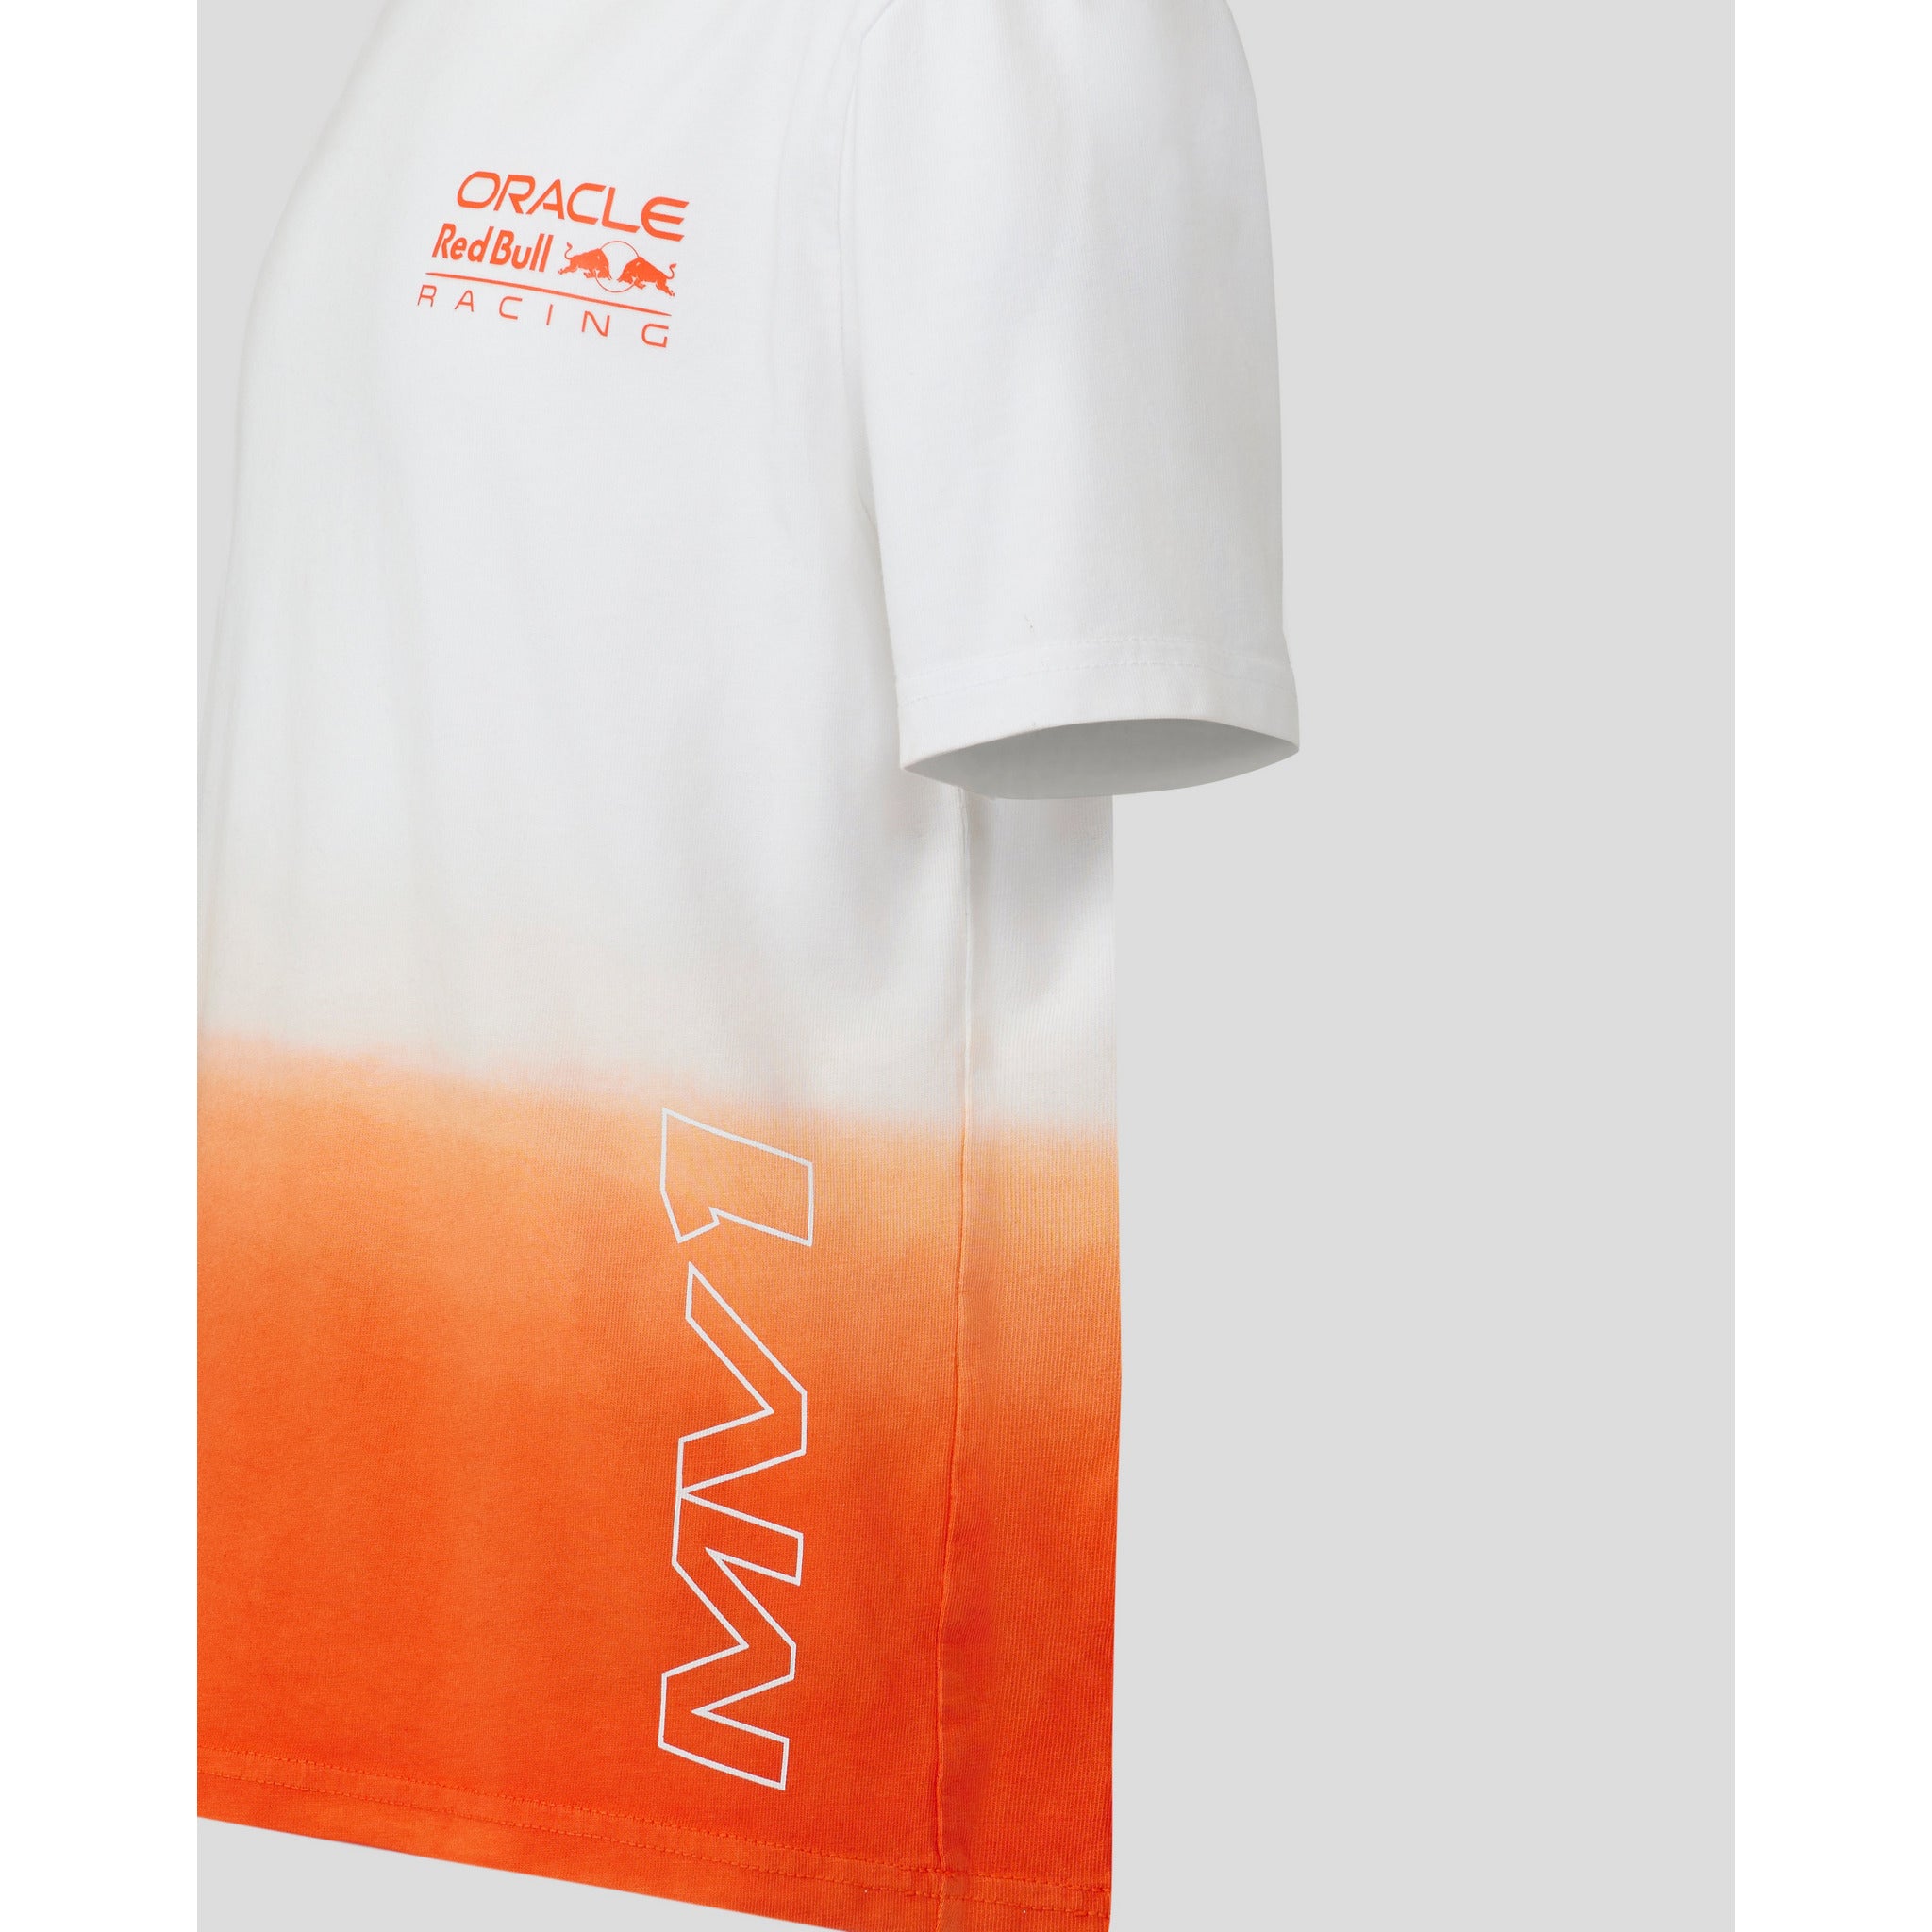 Red Bull Racing F1 Kids Max Verstappen Driver T-Shirt - White/Exotic Orange